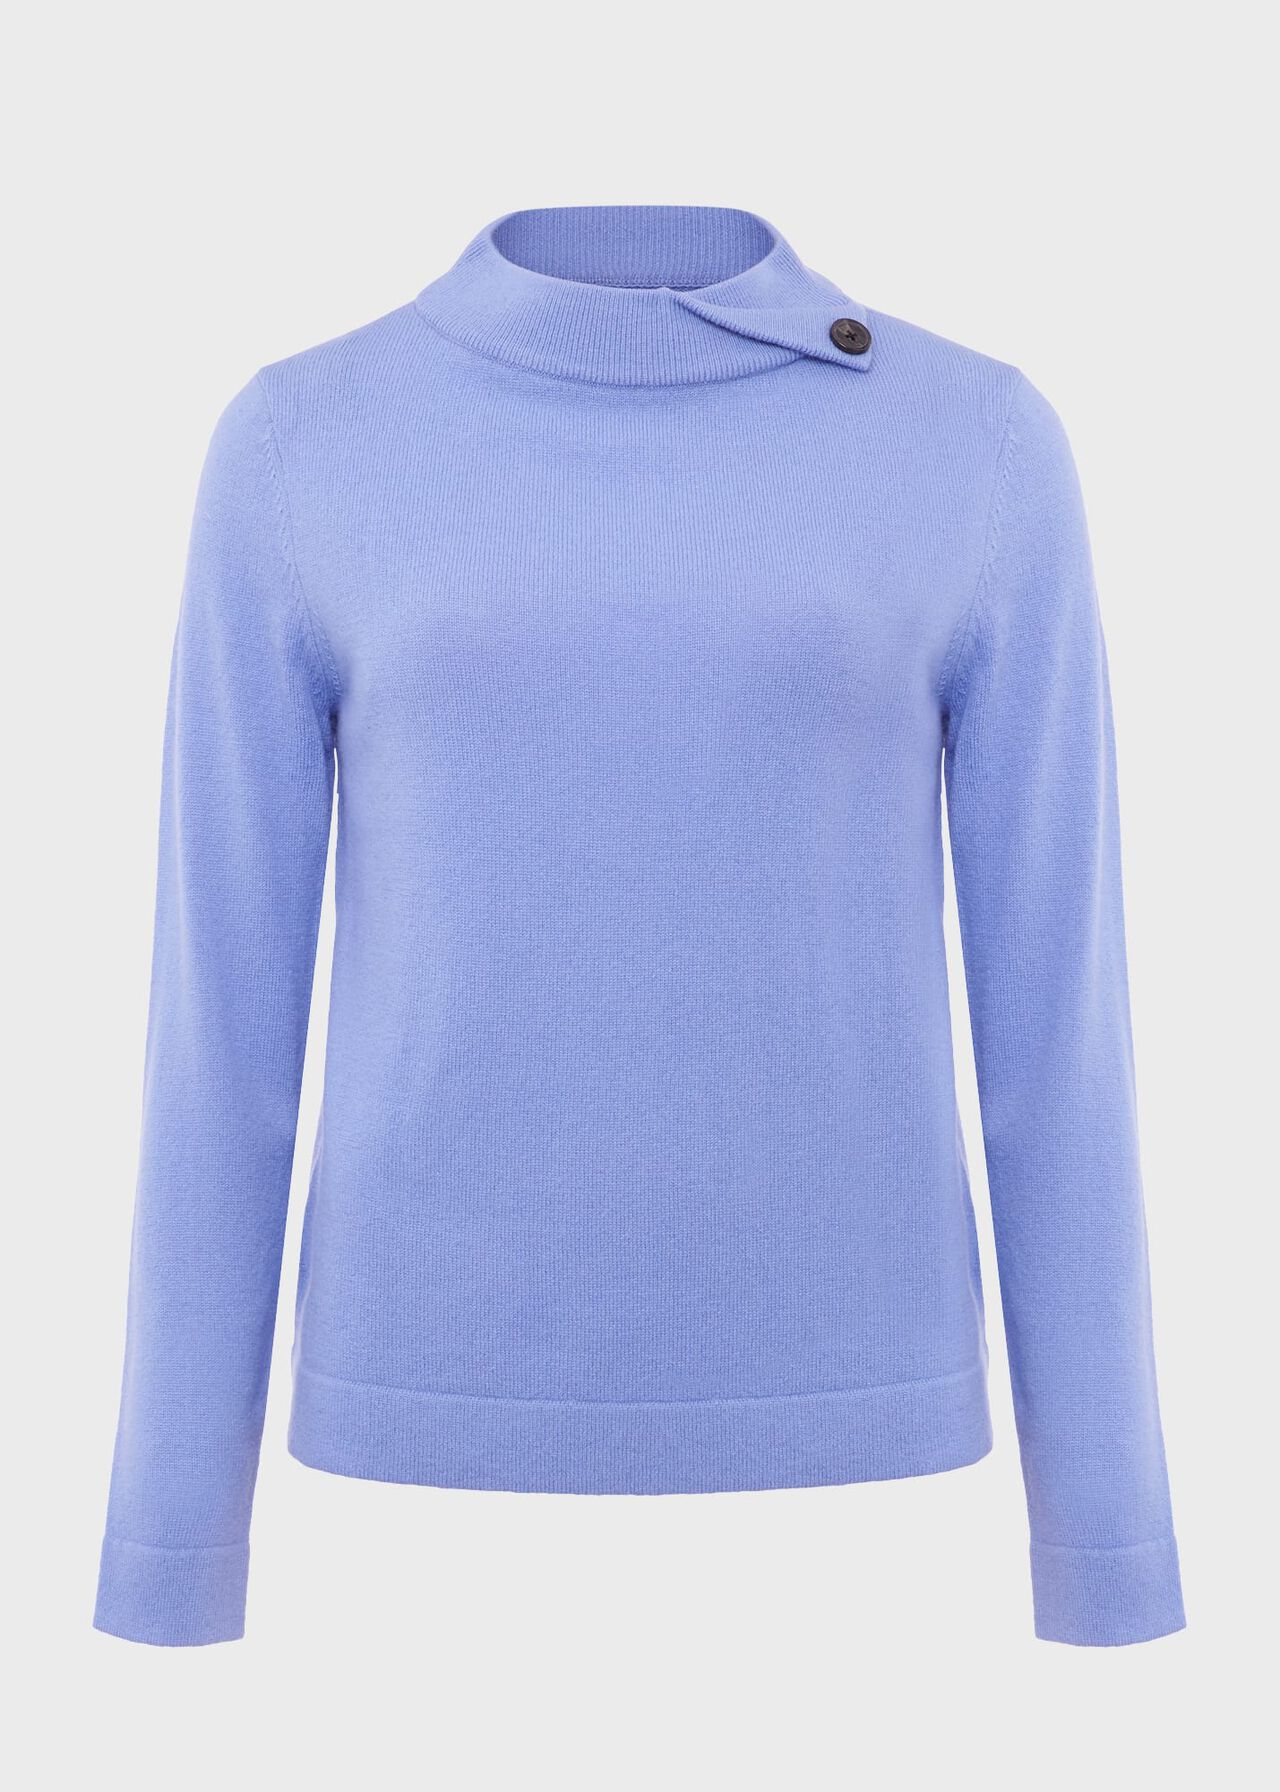 Talia Wool Cashmere Sweater, Deep Sky Blue, hi-res